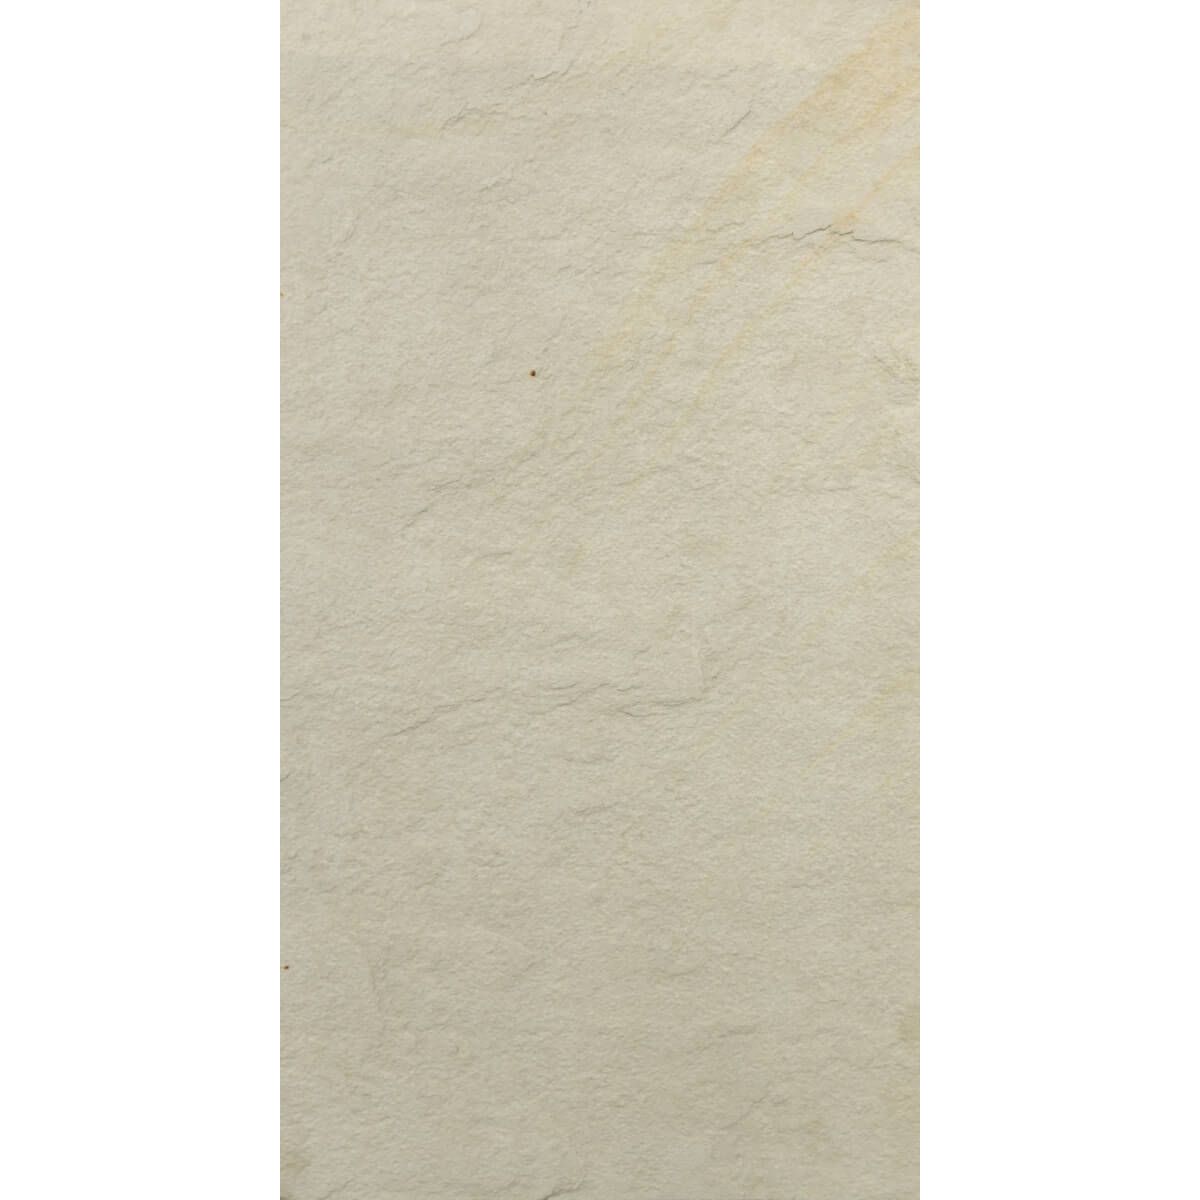 Fornir kamienny Mint White 2MM tapeta 122x61x0,2 cm   